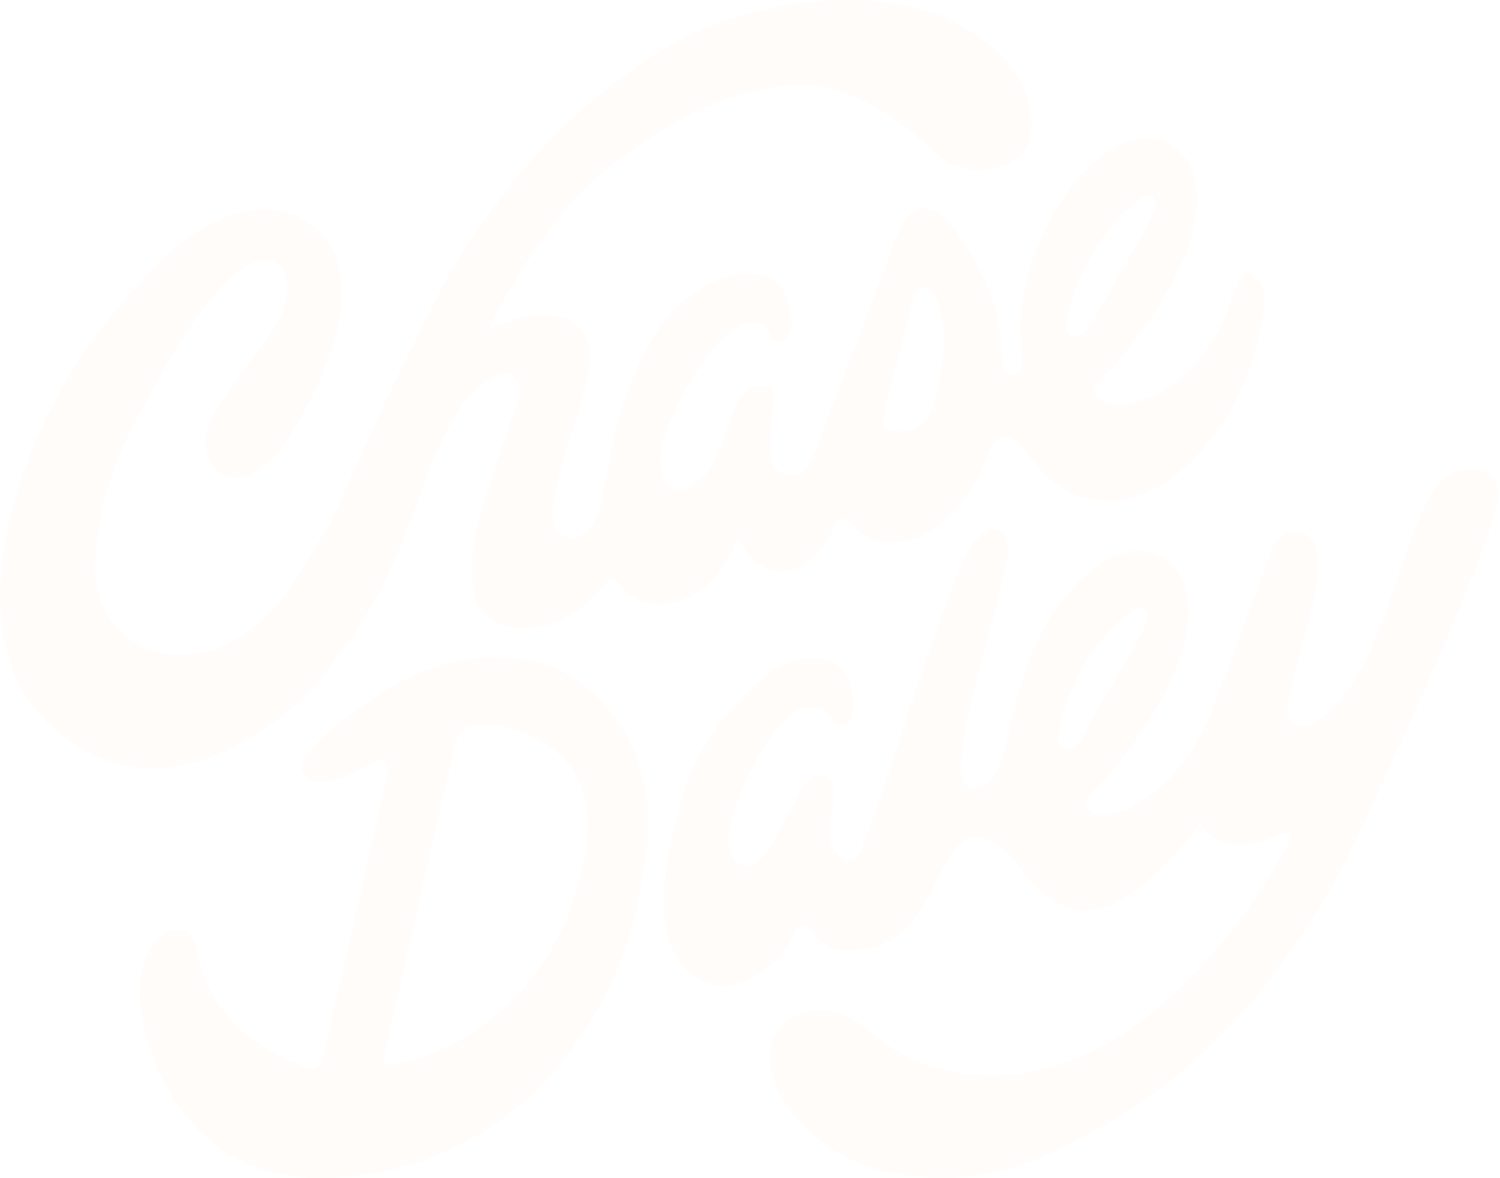 Chase Daley | Photo + Film House